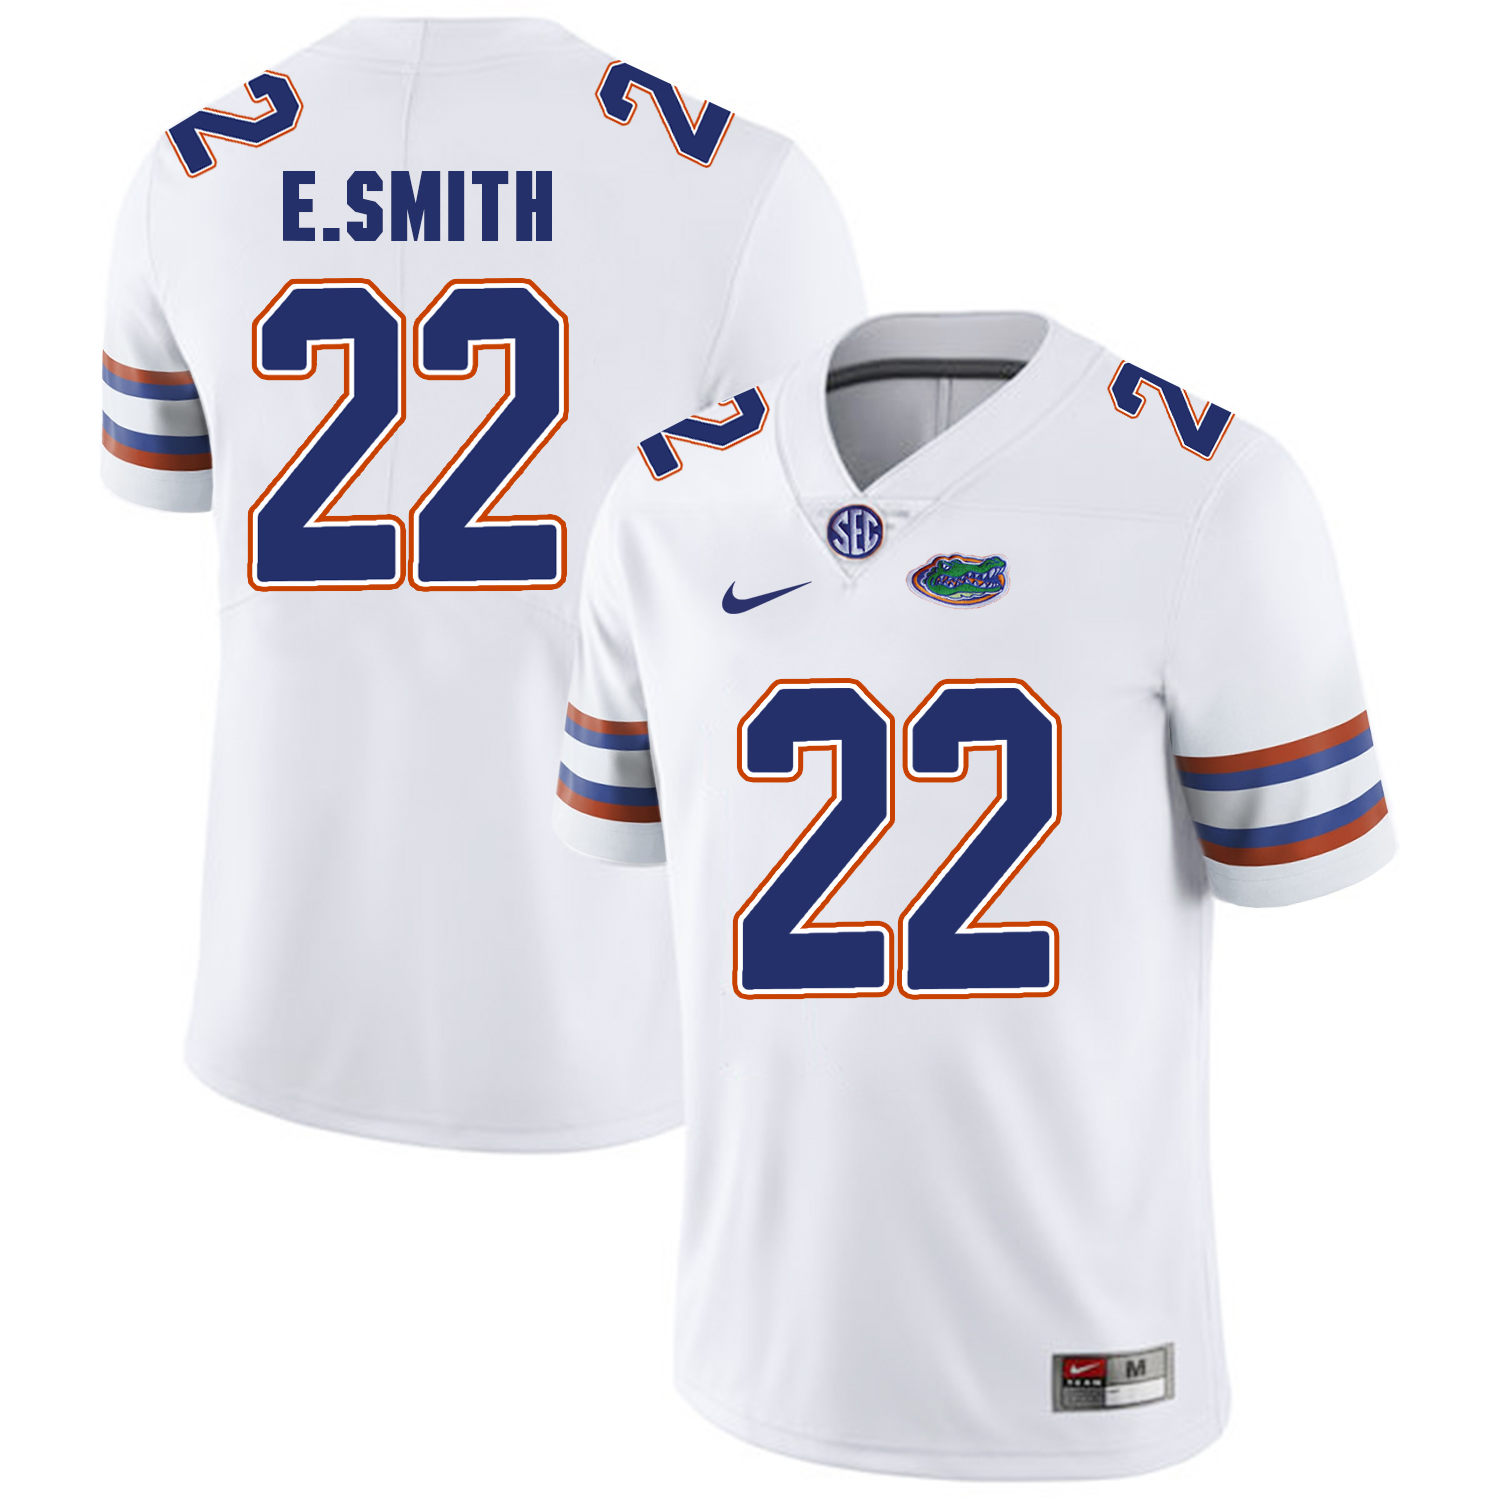 Florida Gators 22 E.Smith White College Football Jersey